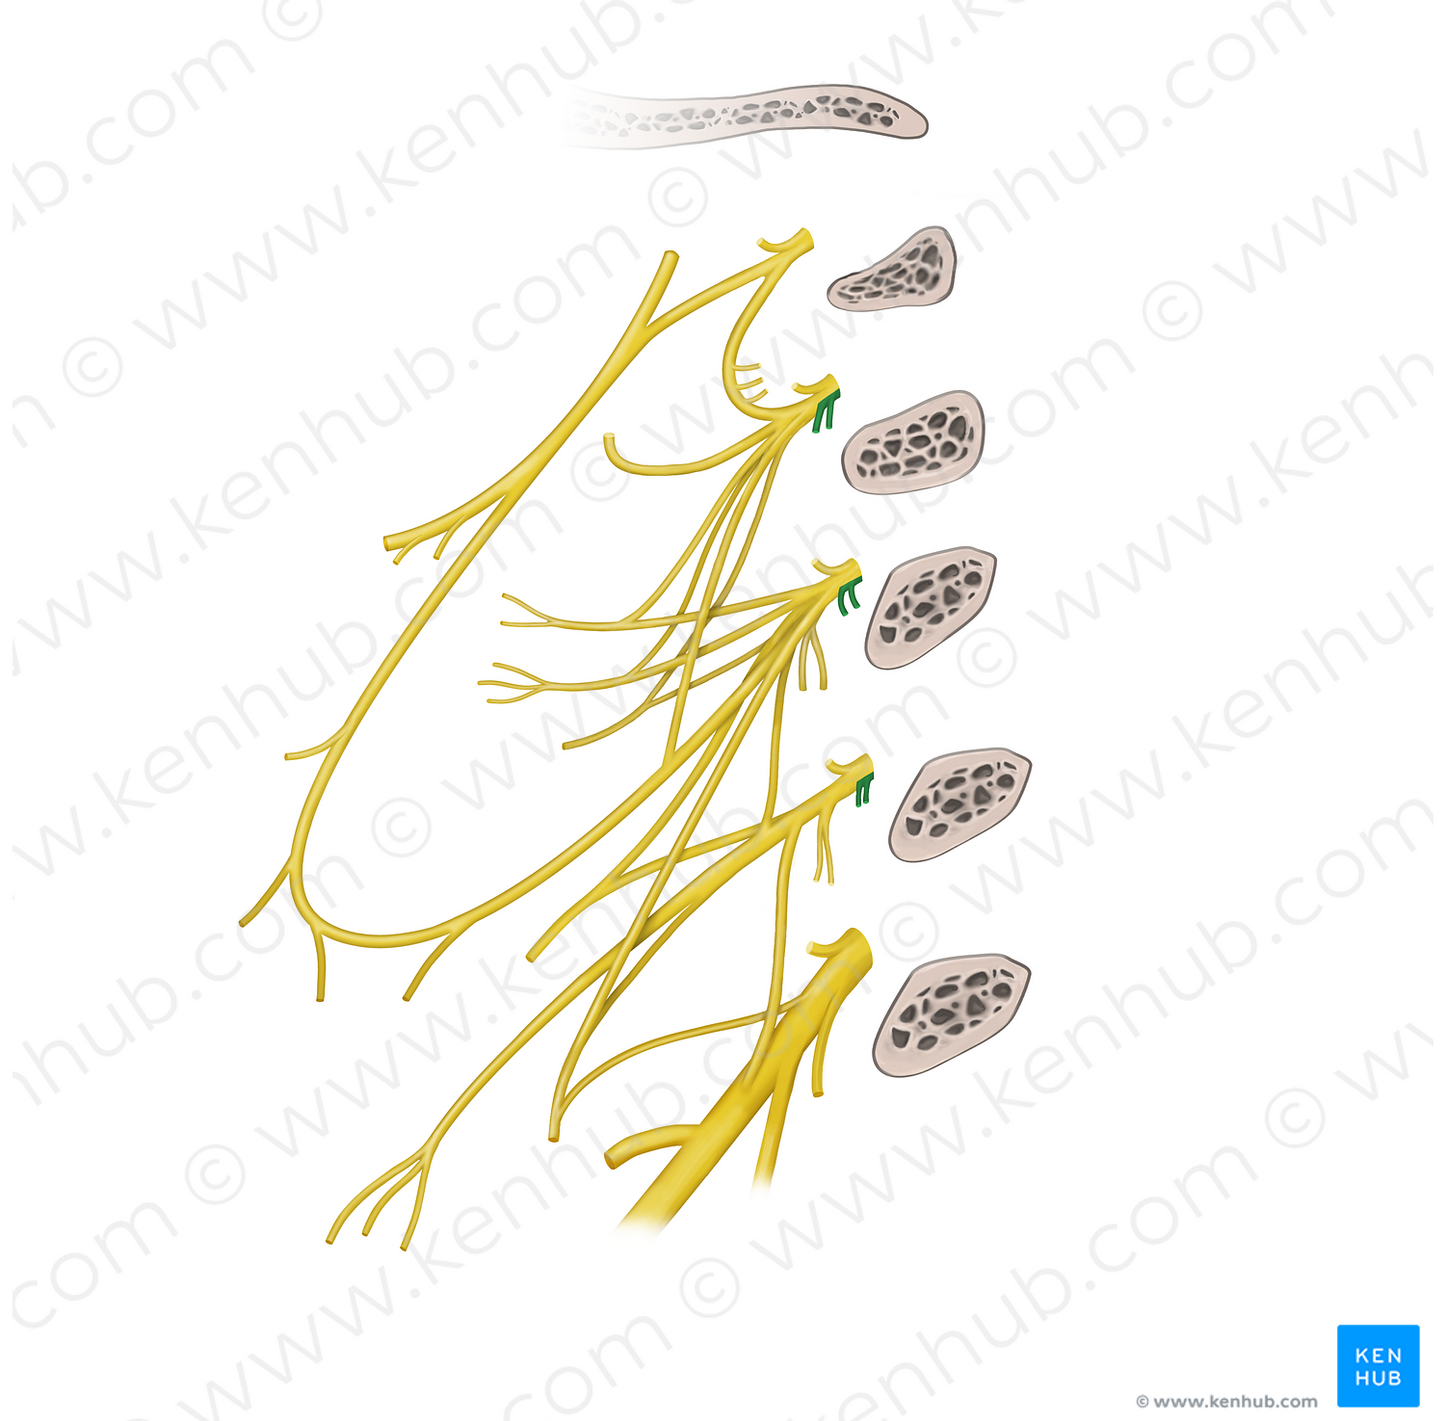 Muscular branches of cervical plexus (longus capitis, longus colli muscles) (#20545)